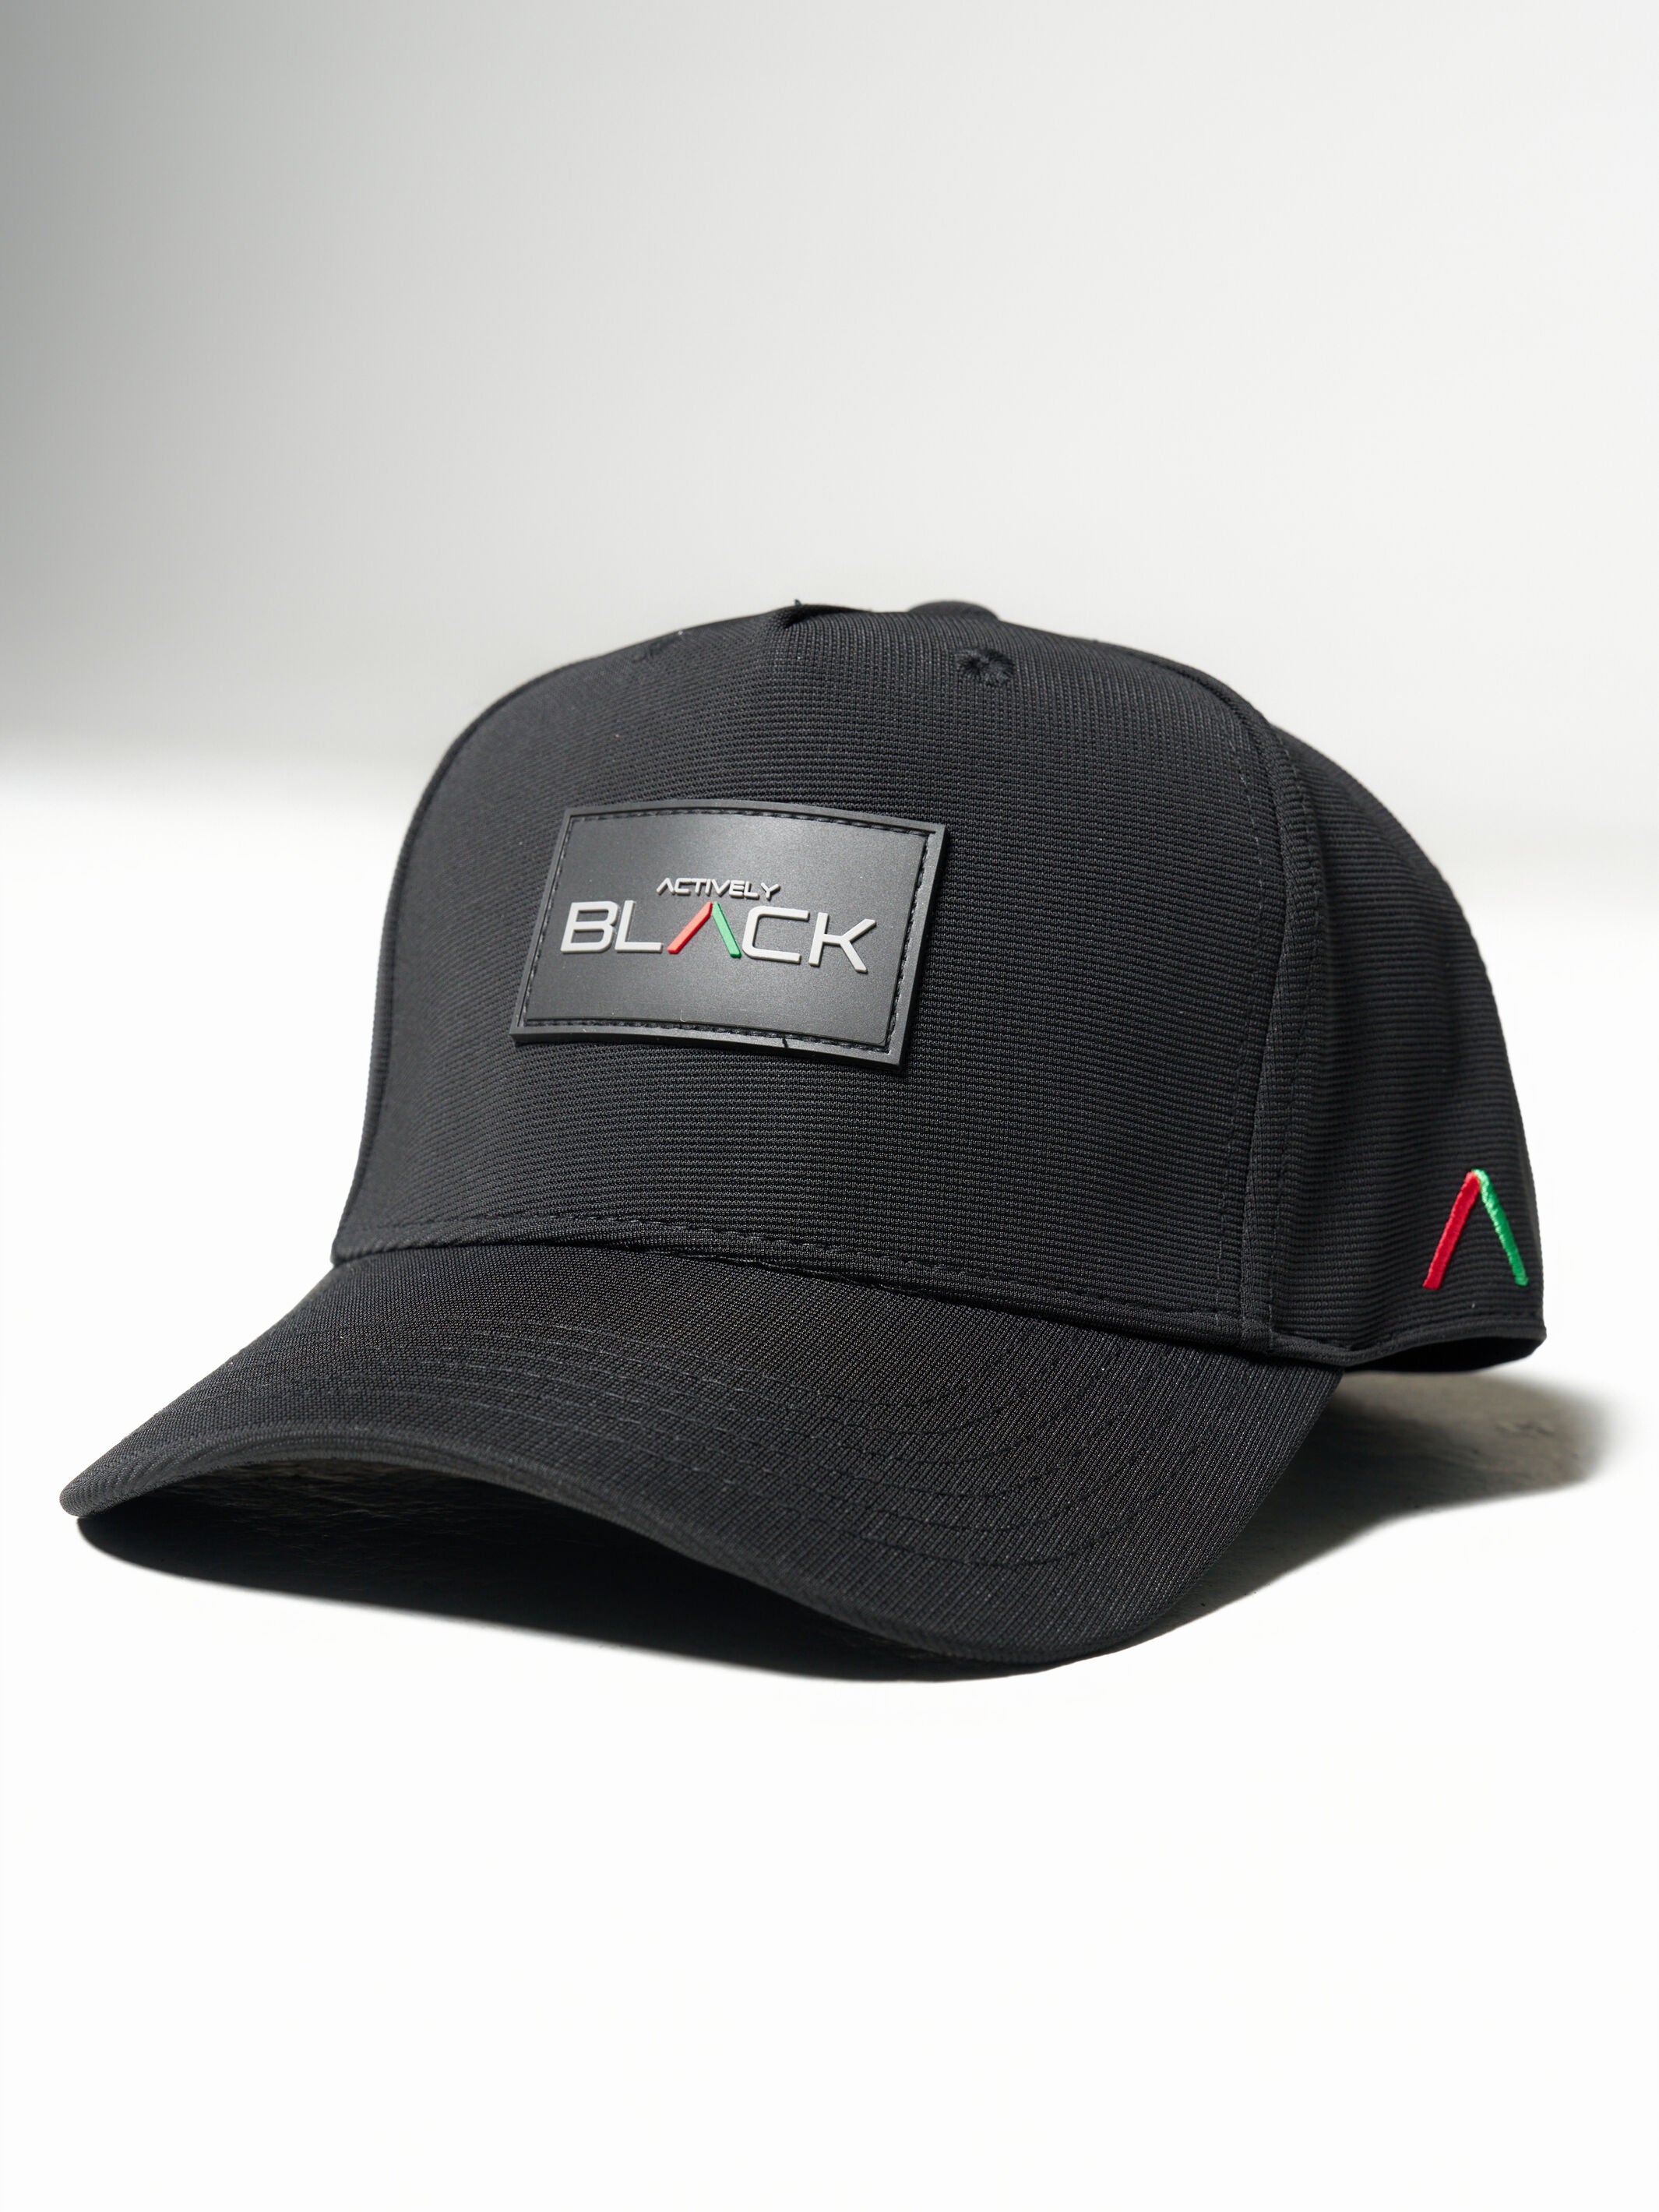 Actively Black Logo Performance Hat